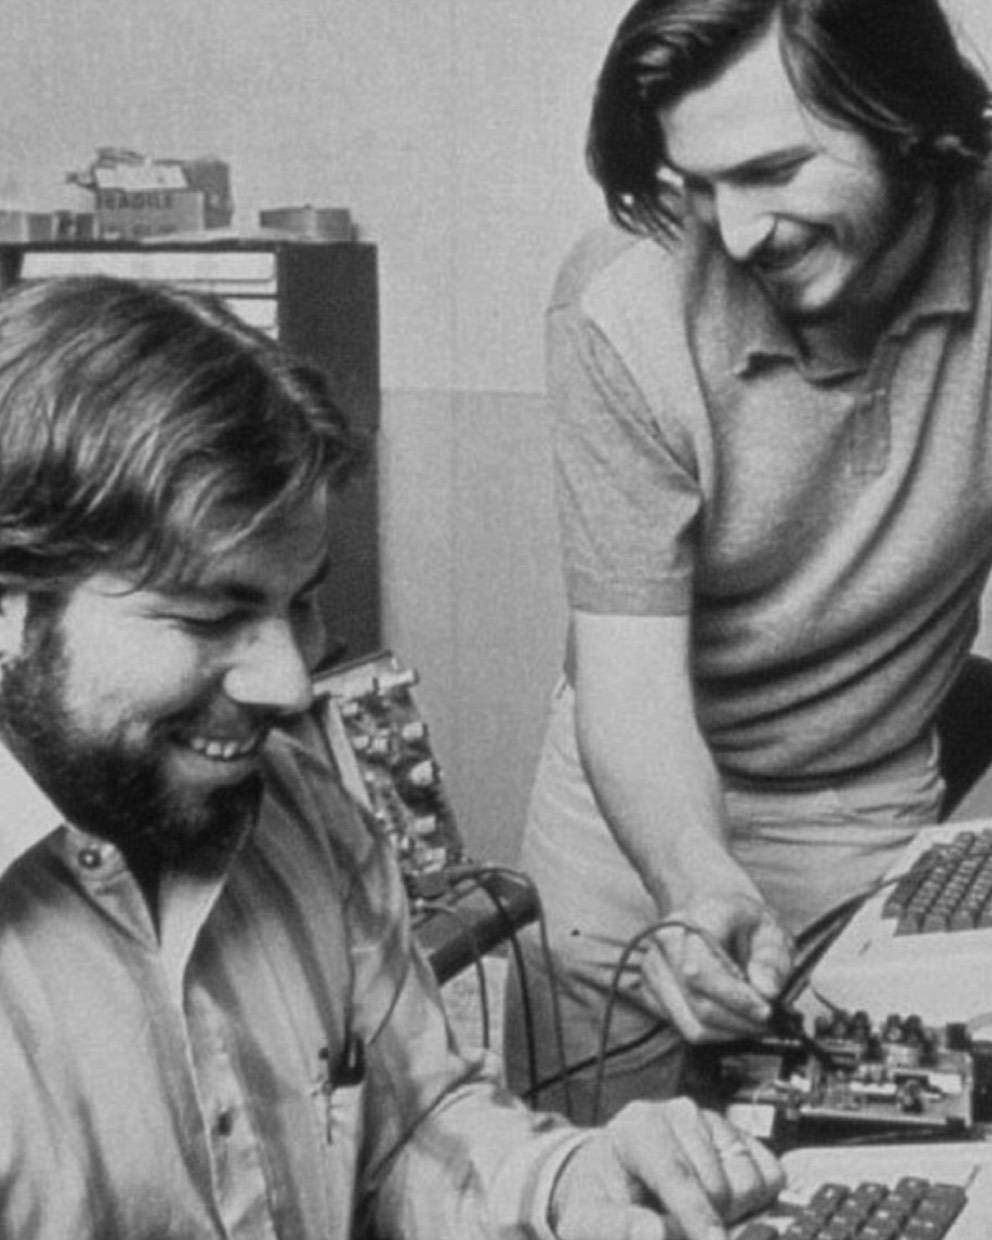 Young Steve Jobs and Steve Wozniak in Black and White Wallpaper